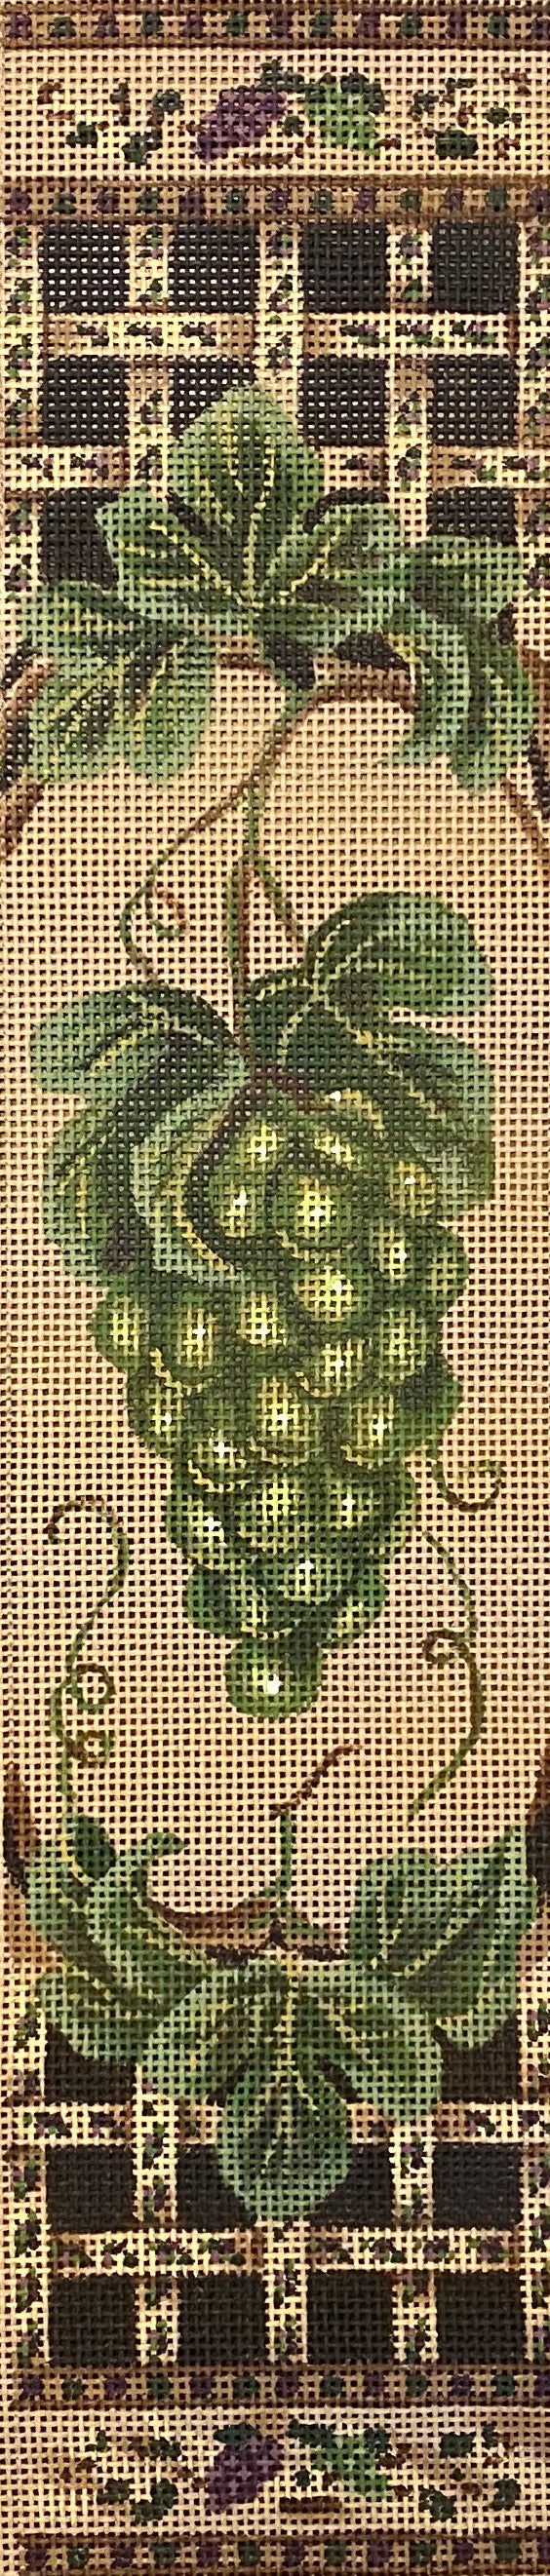 Grapes Panel